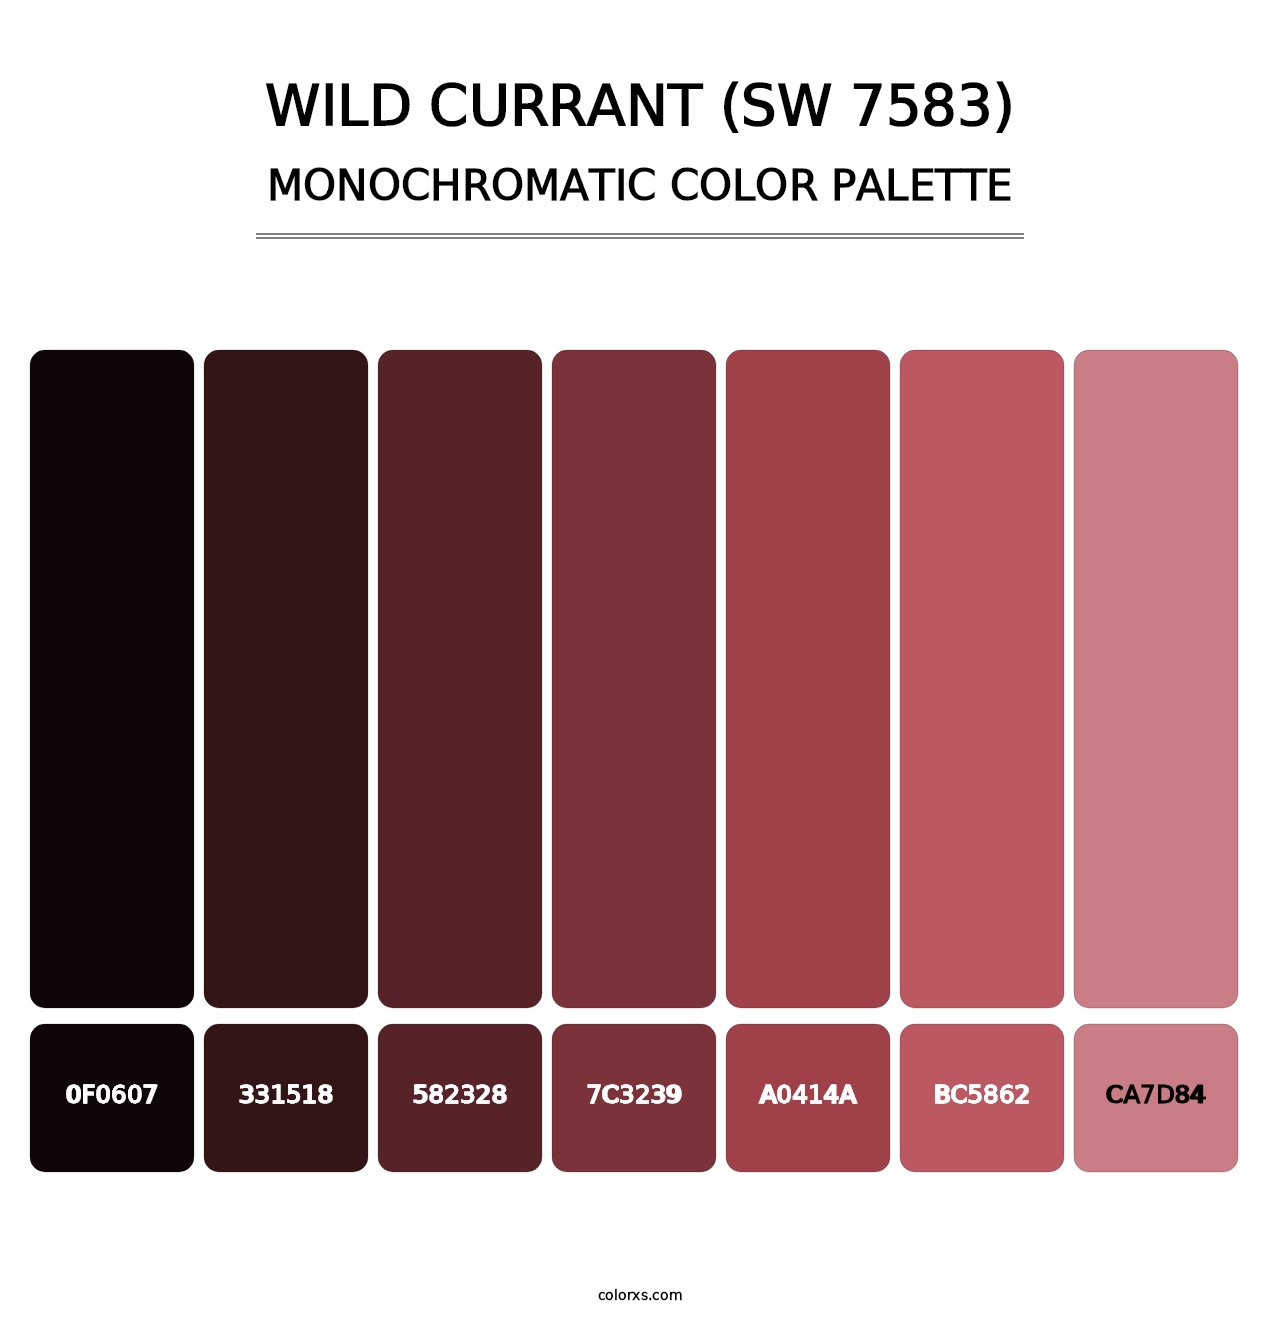 Wild Currant (SW 7583) - Monochromatic Color Palette